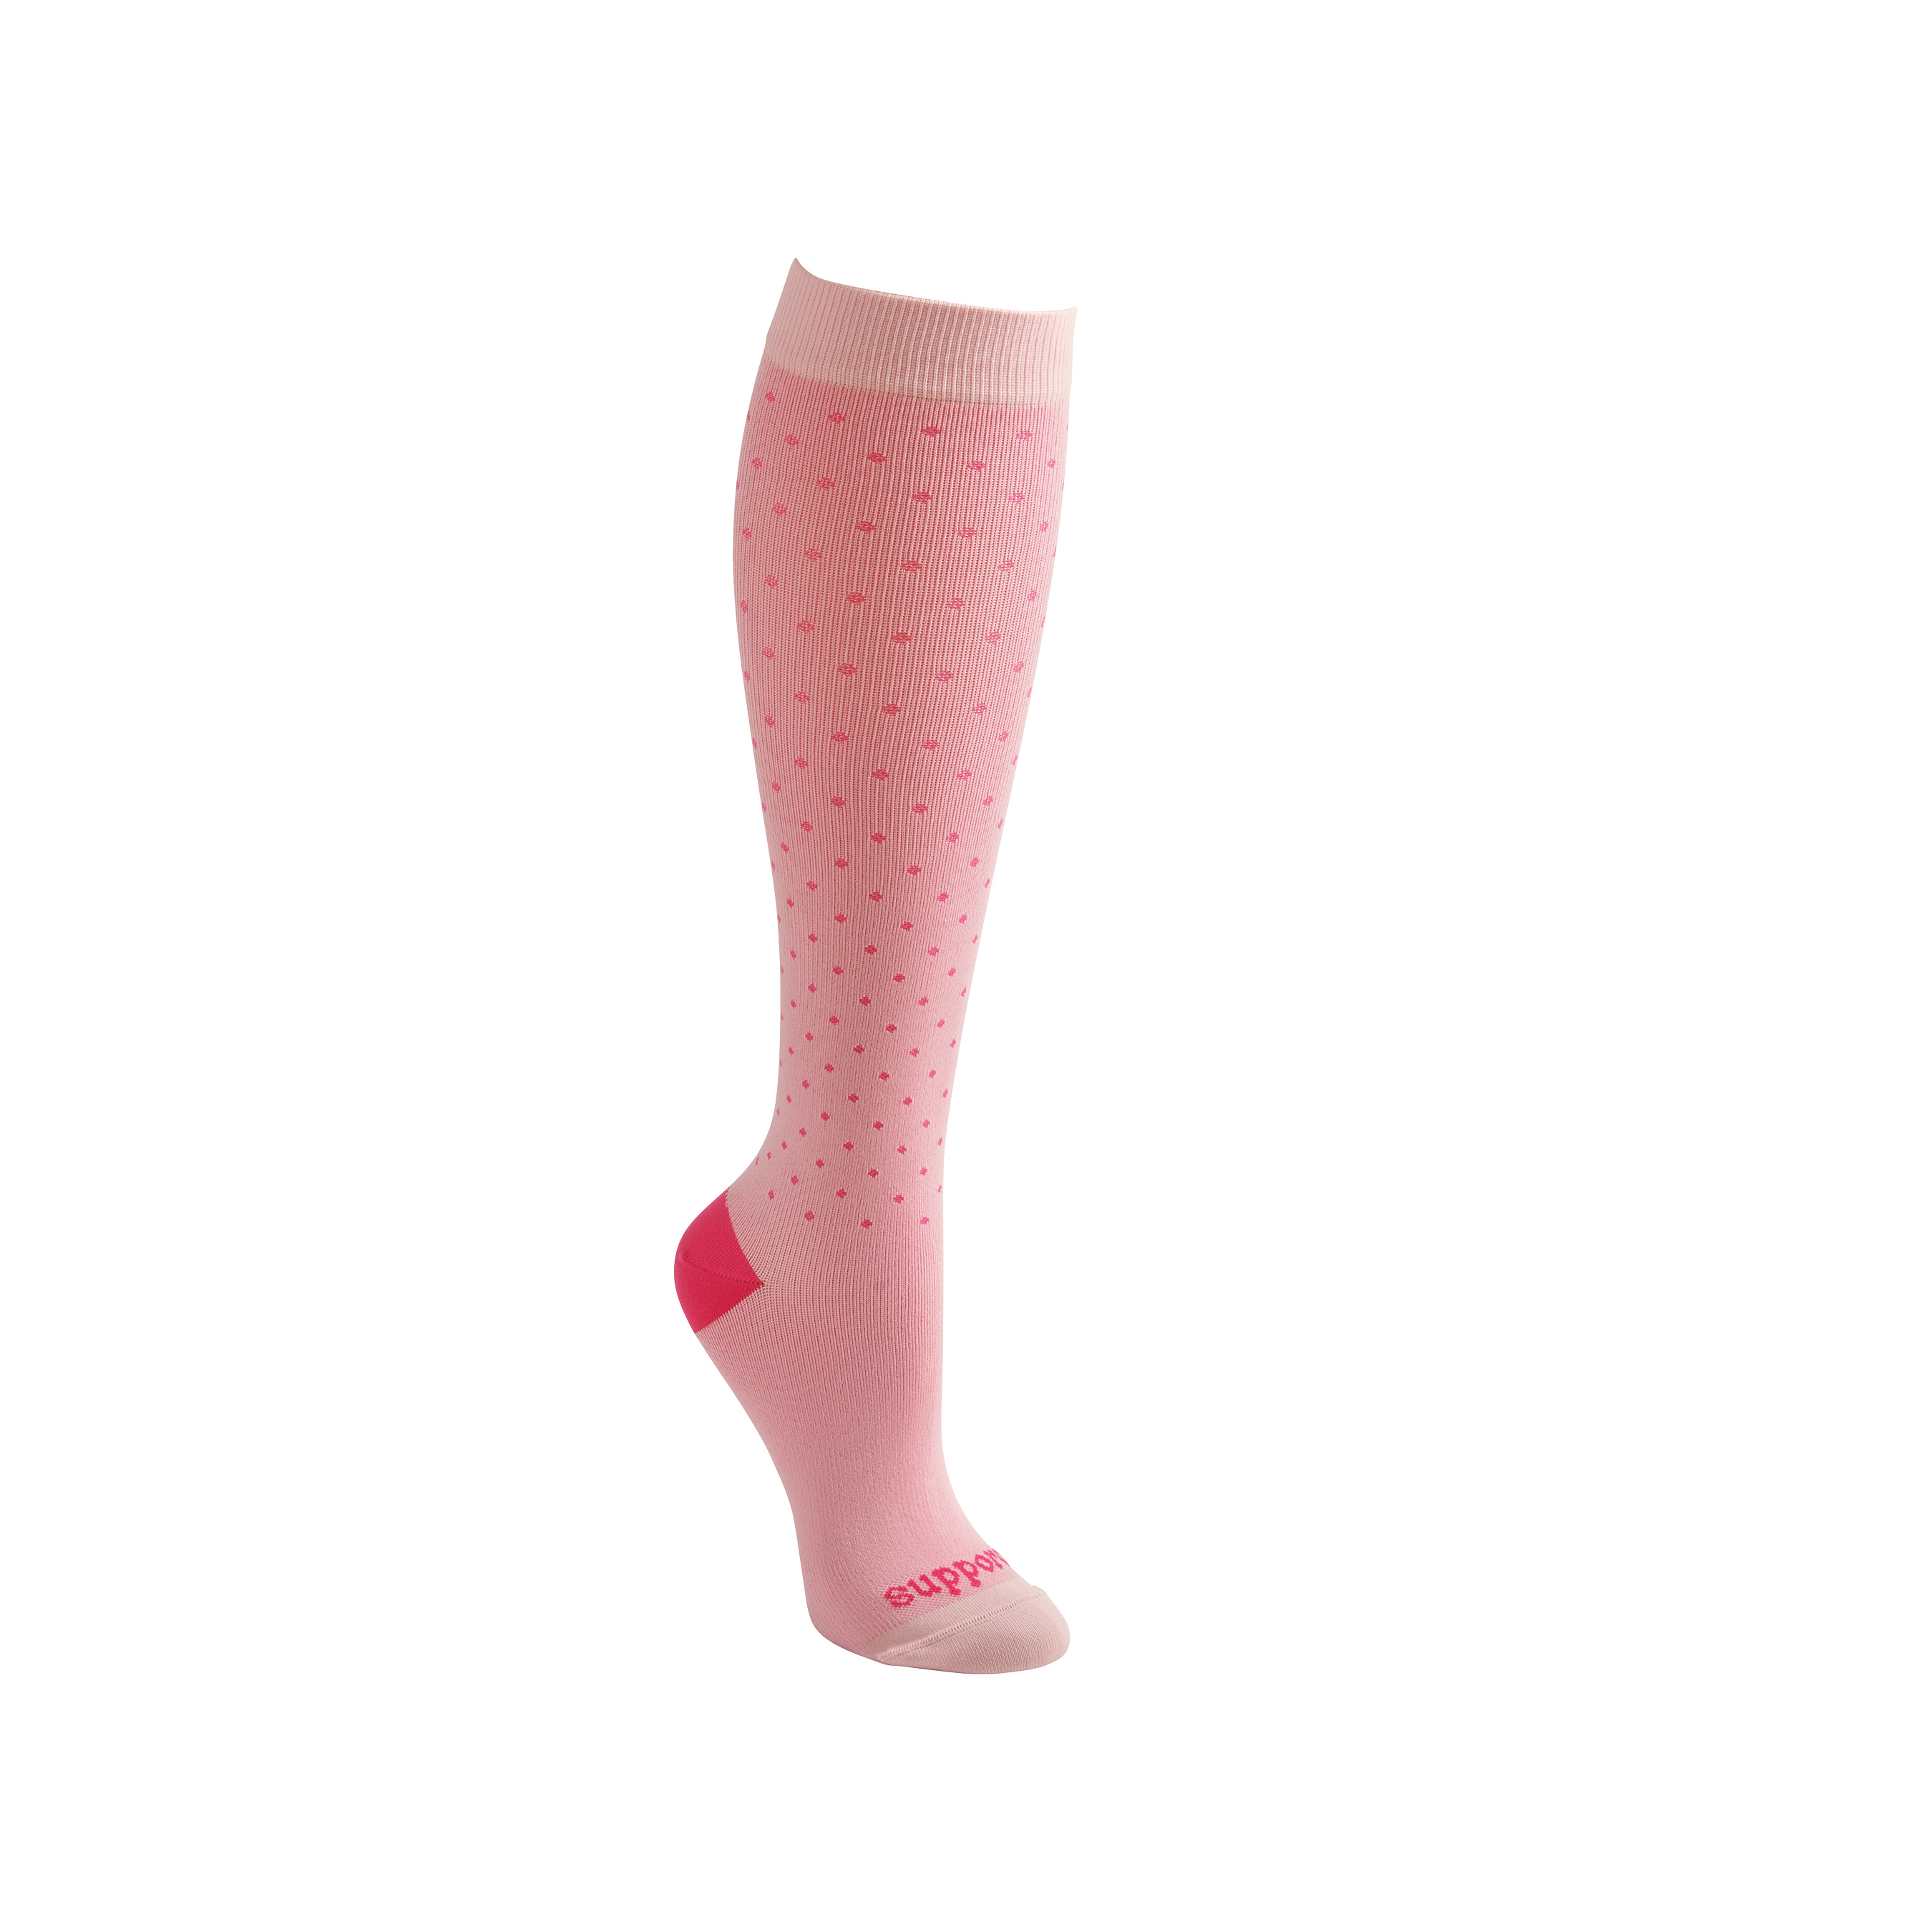 Supporo Pink Polka-Dot Compression Socks